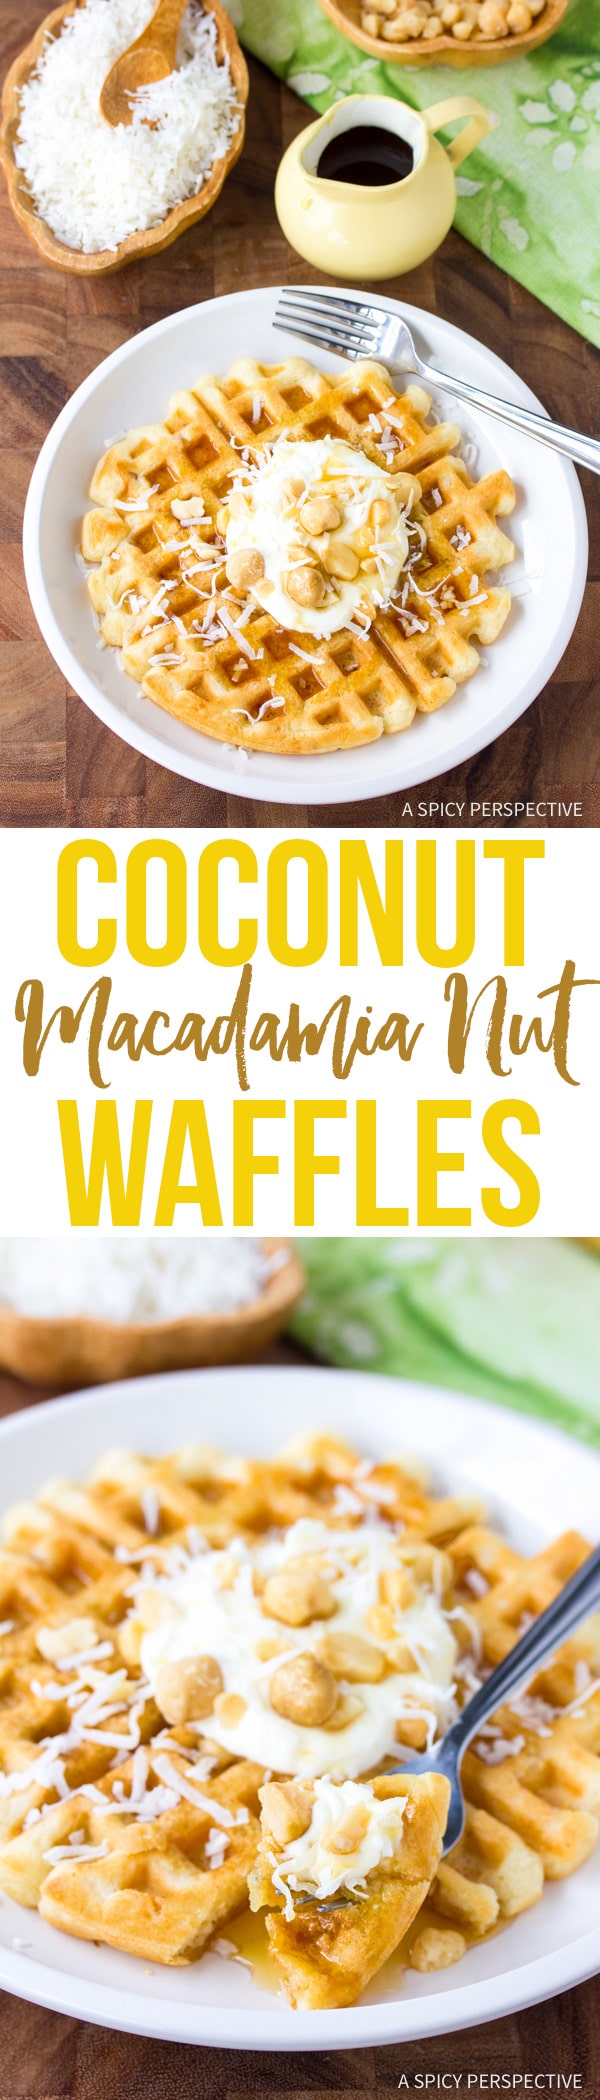 Perfect Coconut Macadamia Nut Waffles Recipe